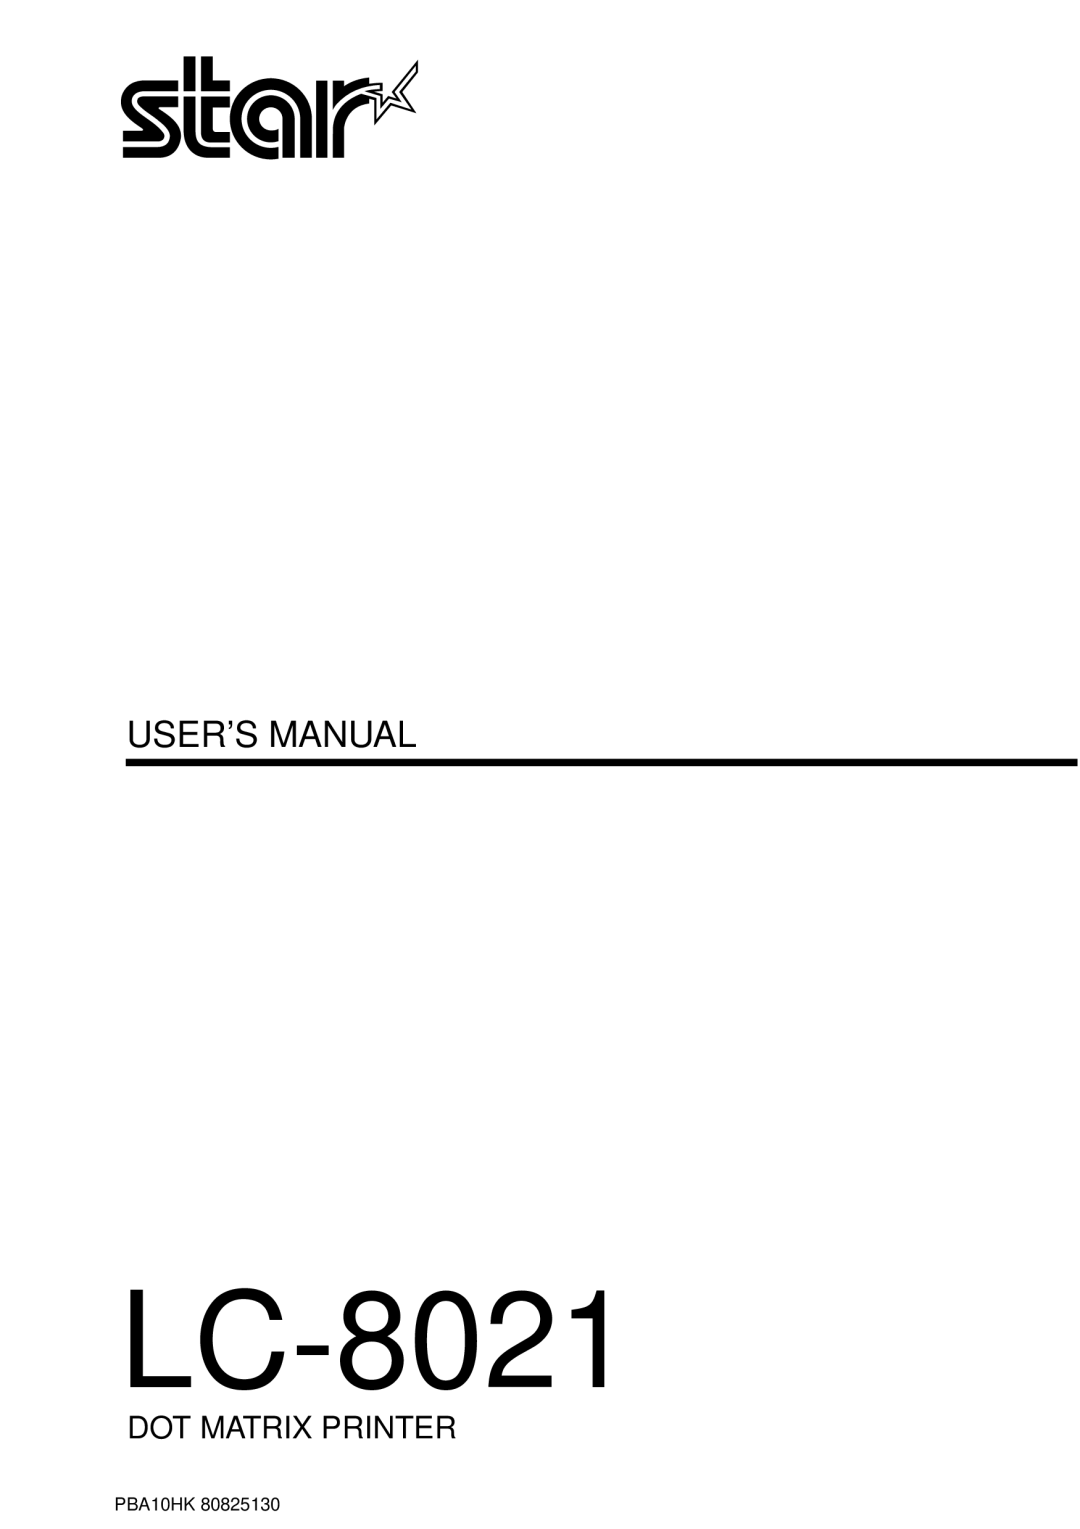 Star Micronics LC-8021 manual User’S Manual, Dot Matrix Printer, PBA10HK 